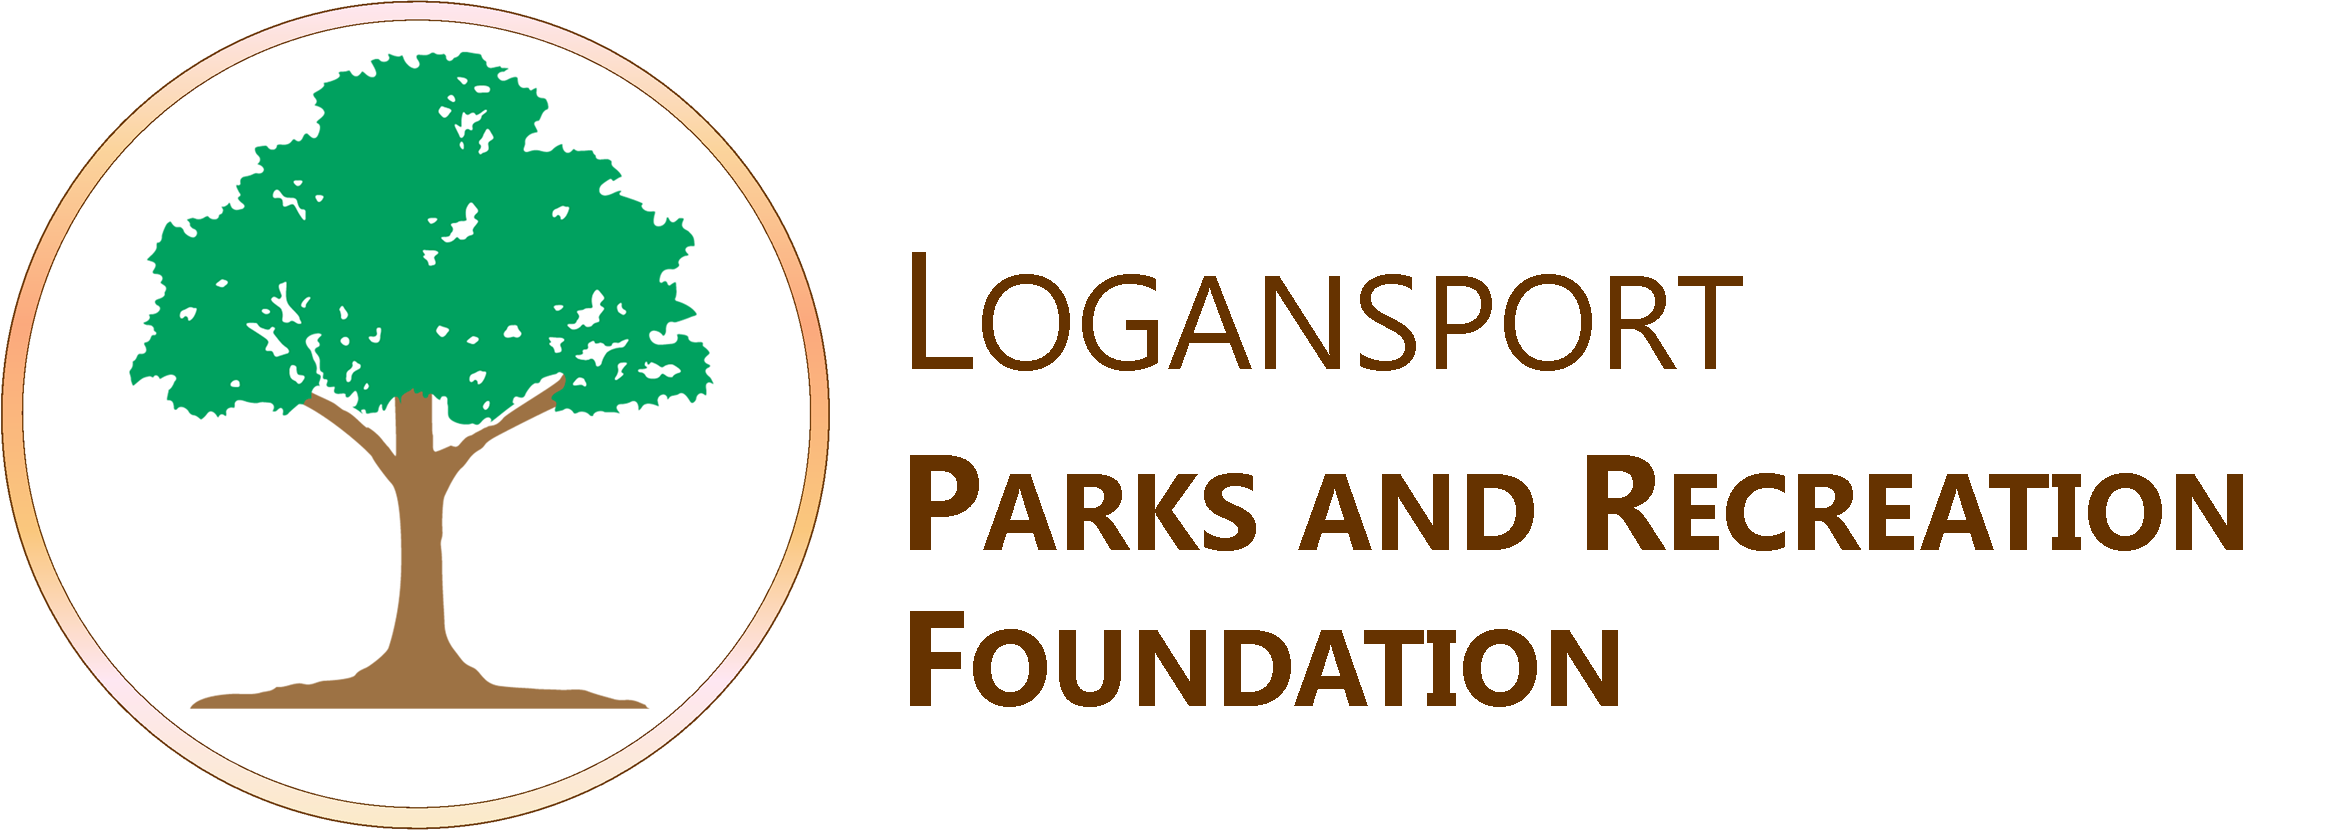 Logansport Parks and Recreation Foundation